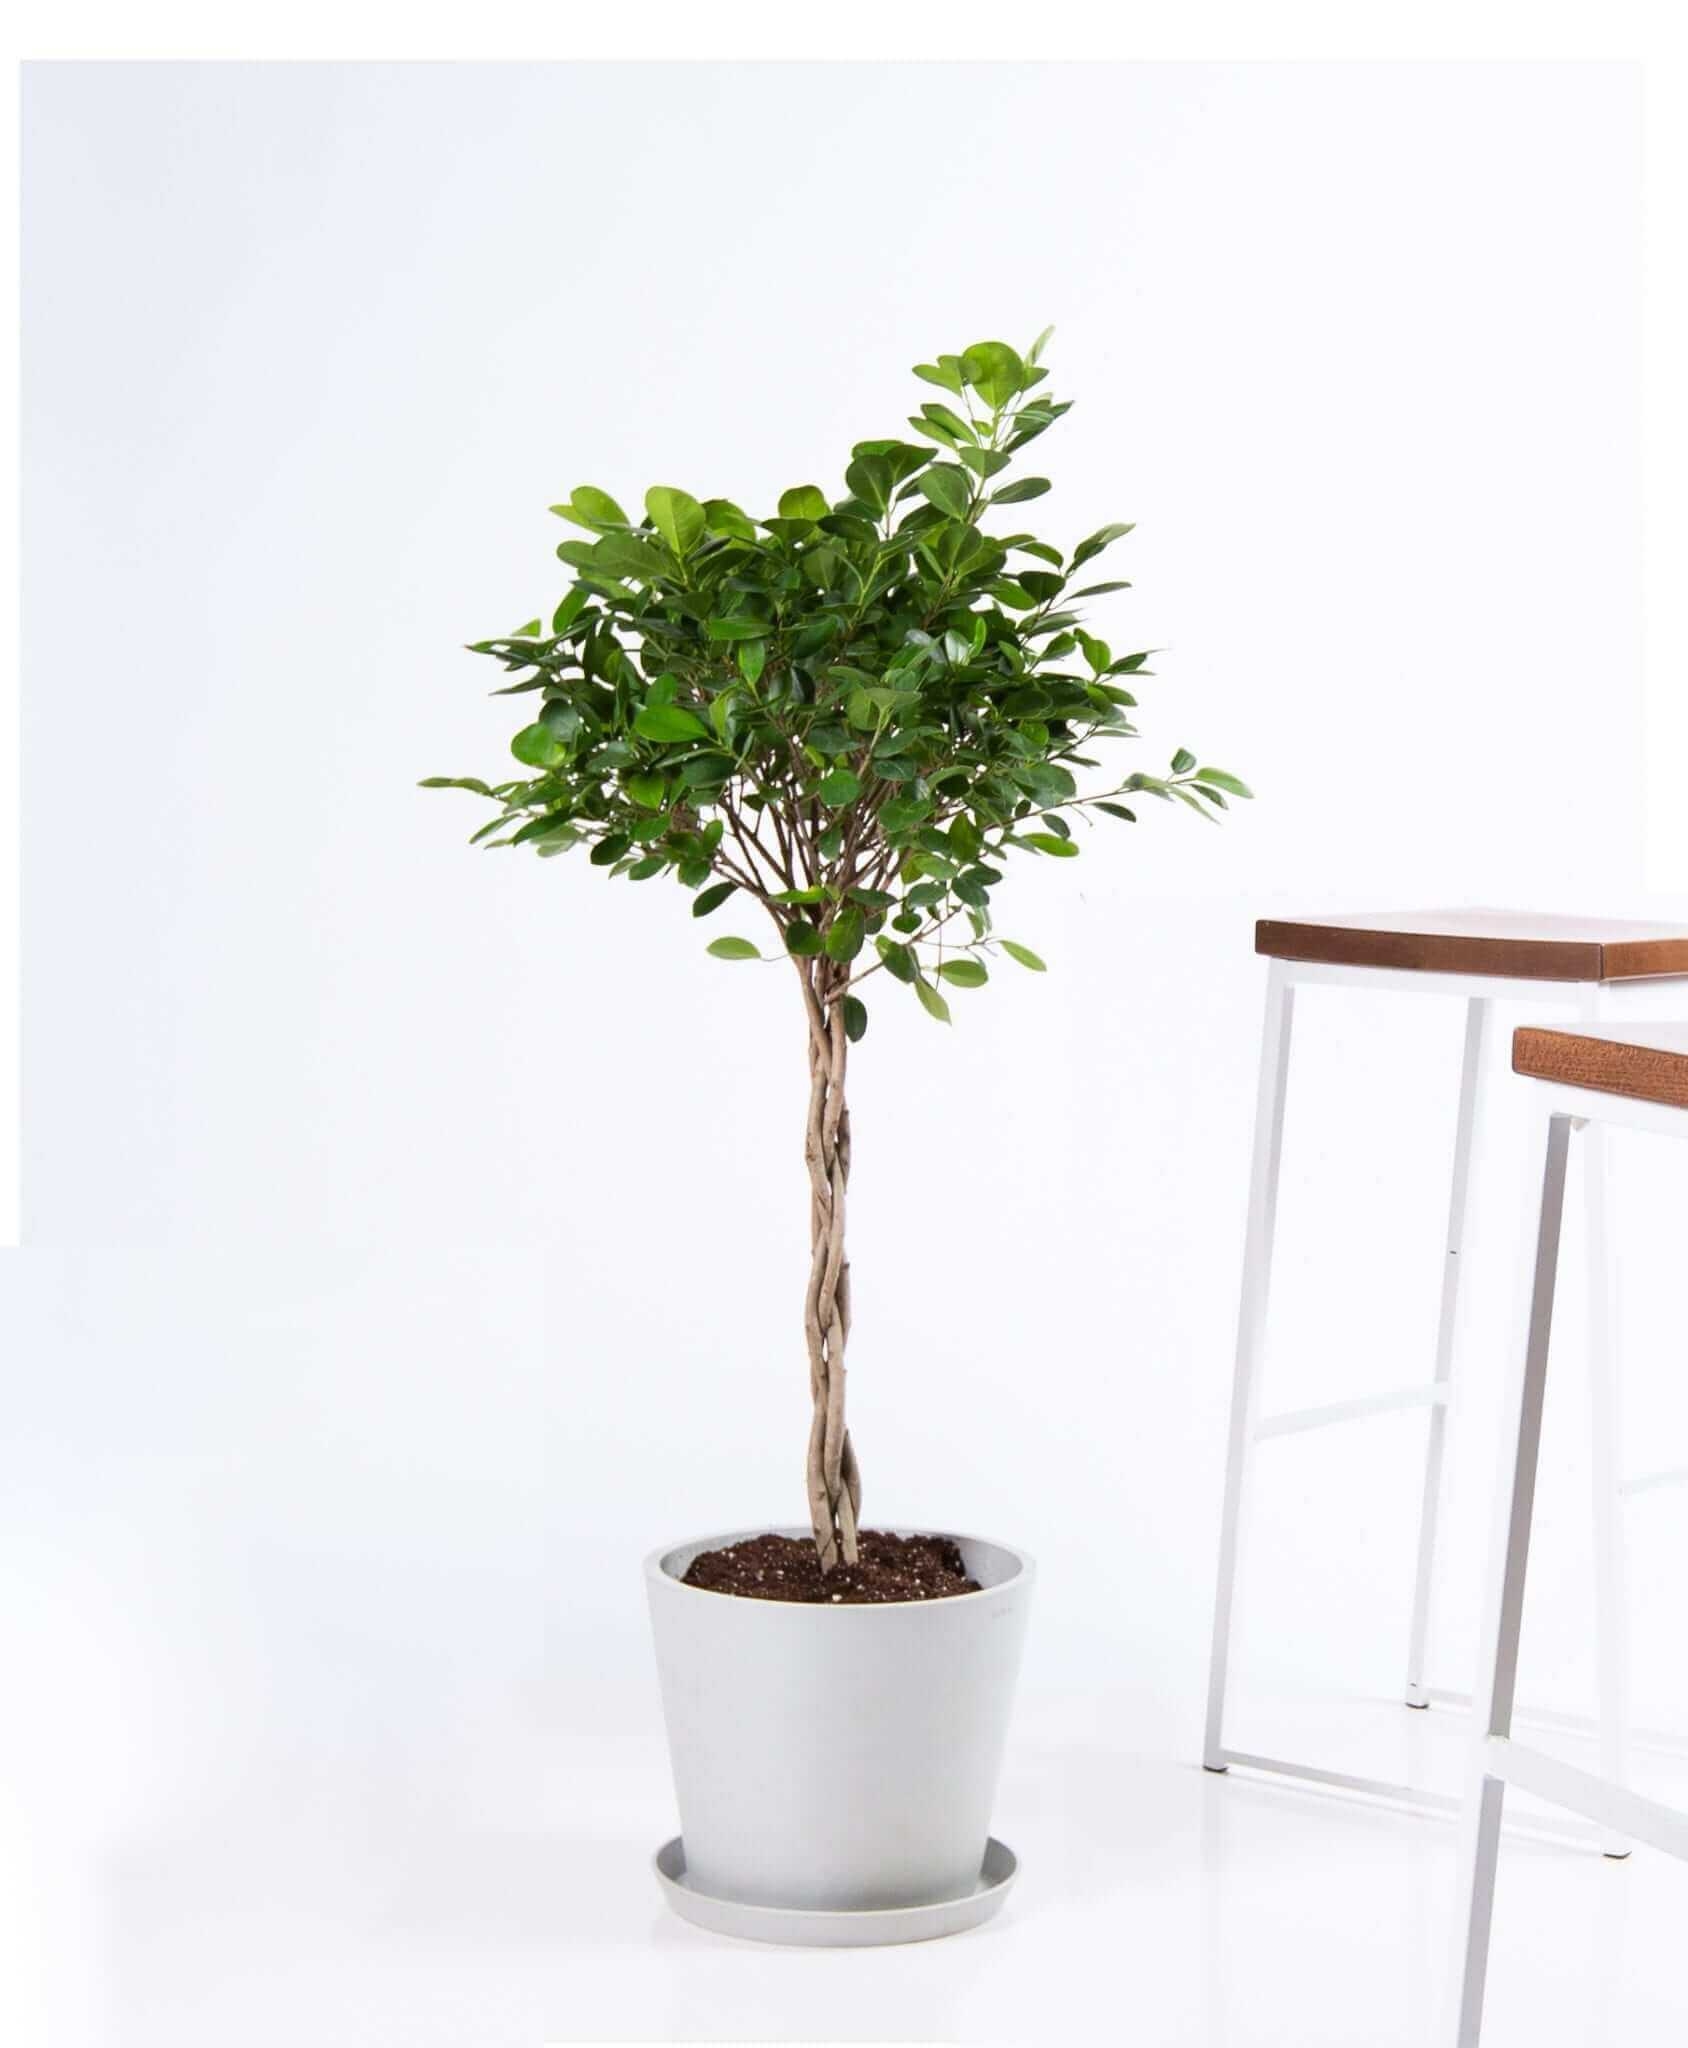 Ficus danielle - Stone - Image 0